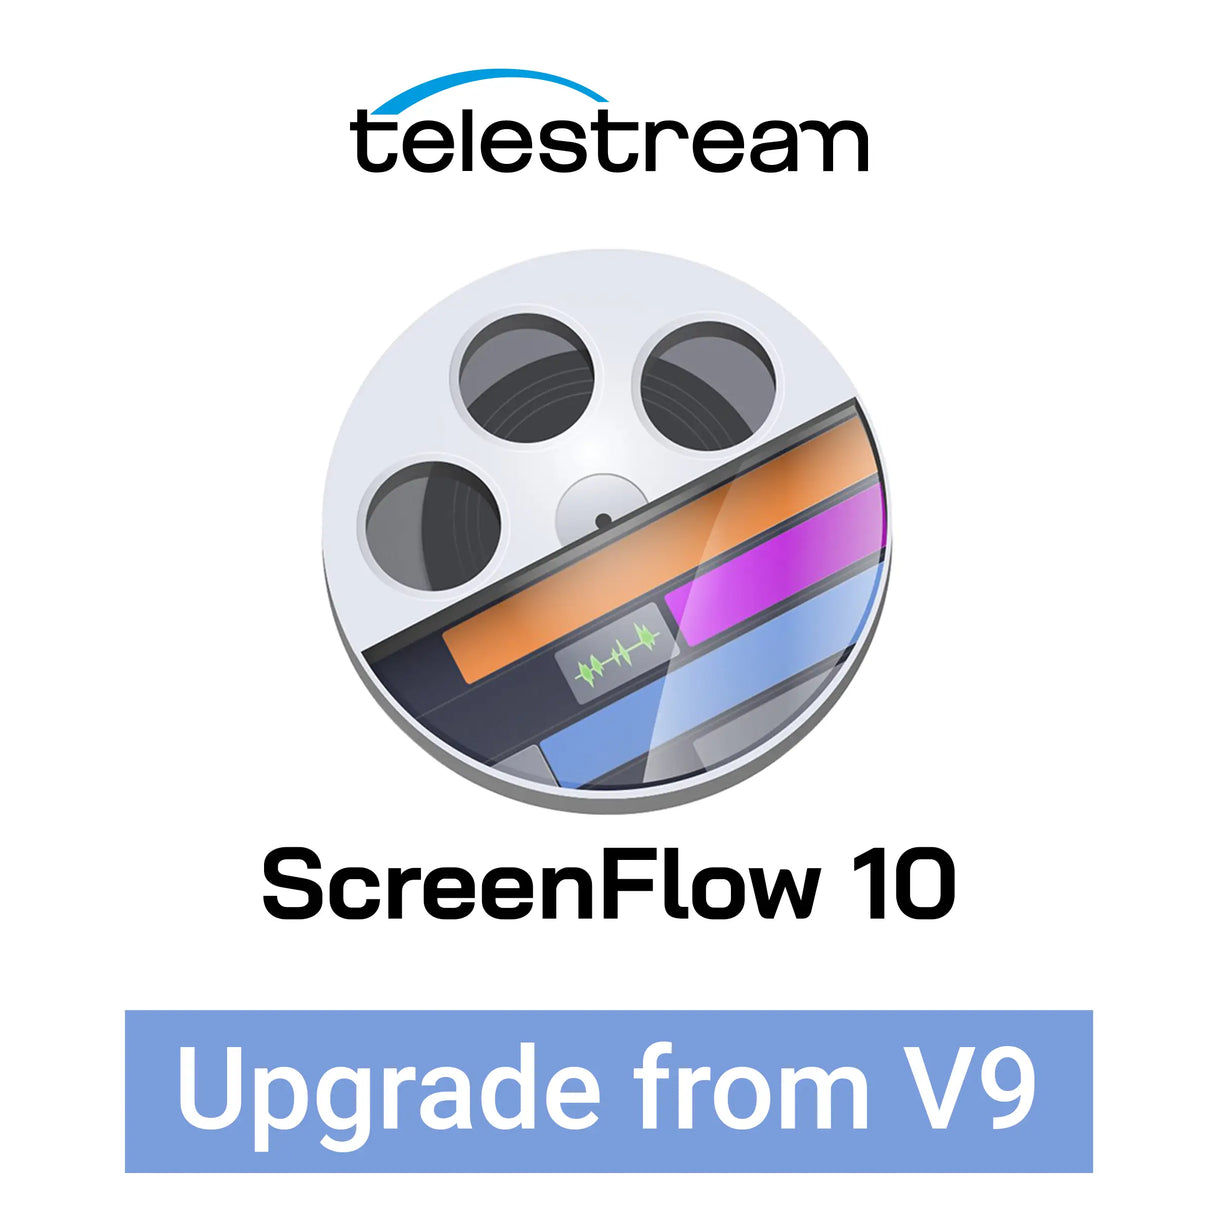 Telestream ScreenFlow 10 Video Editing Software Upgrade from V9